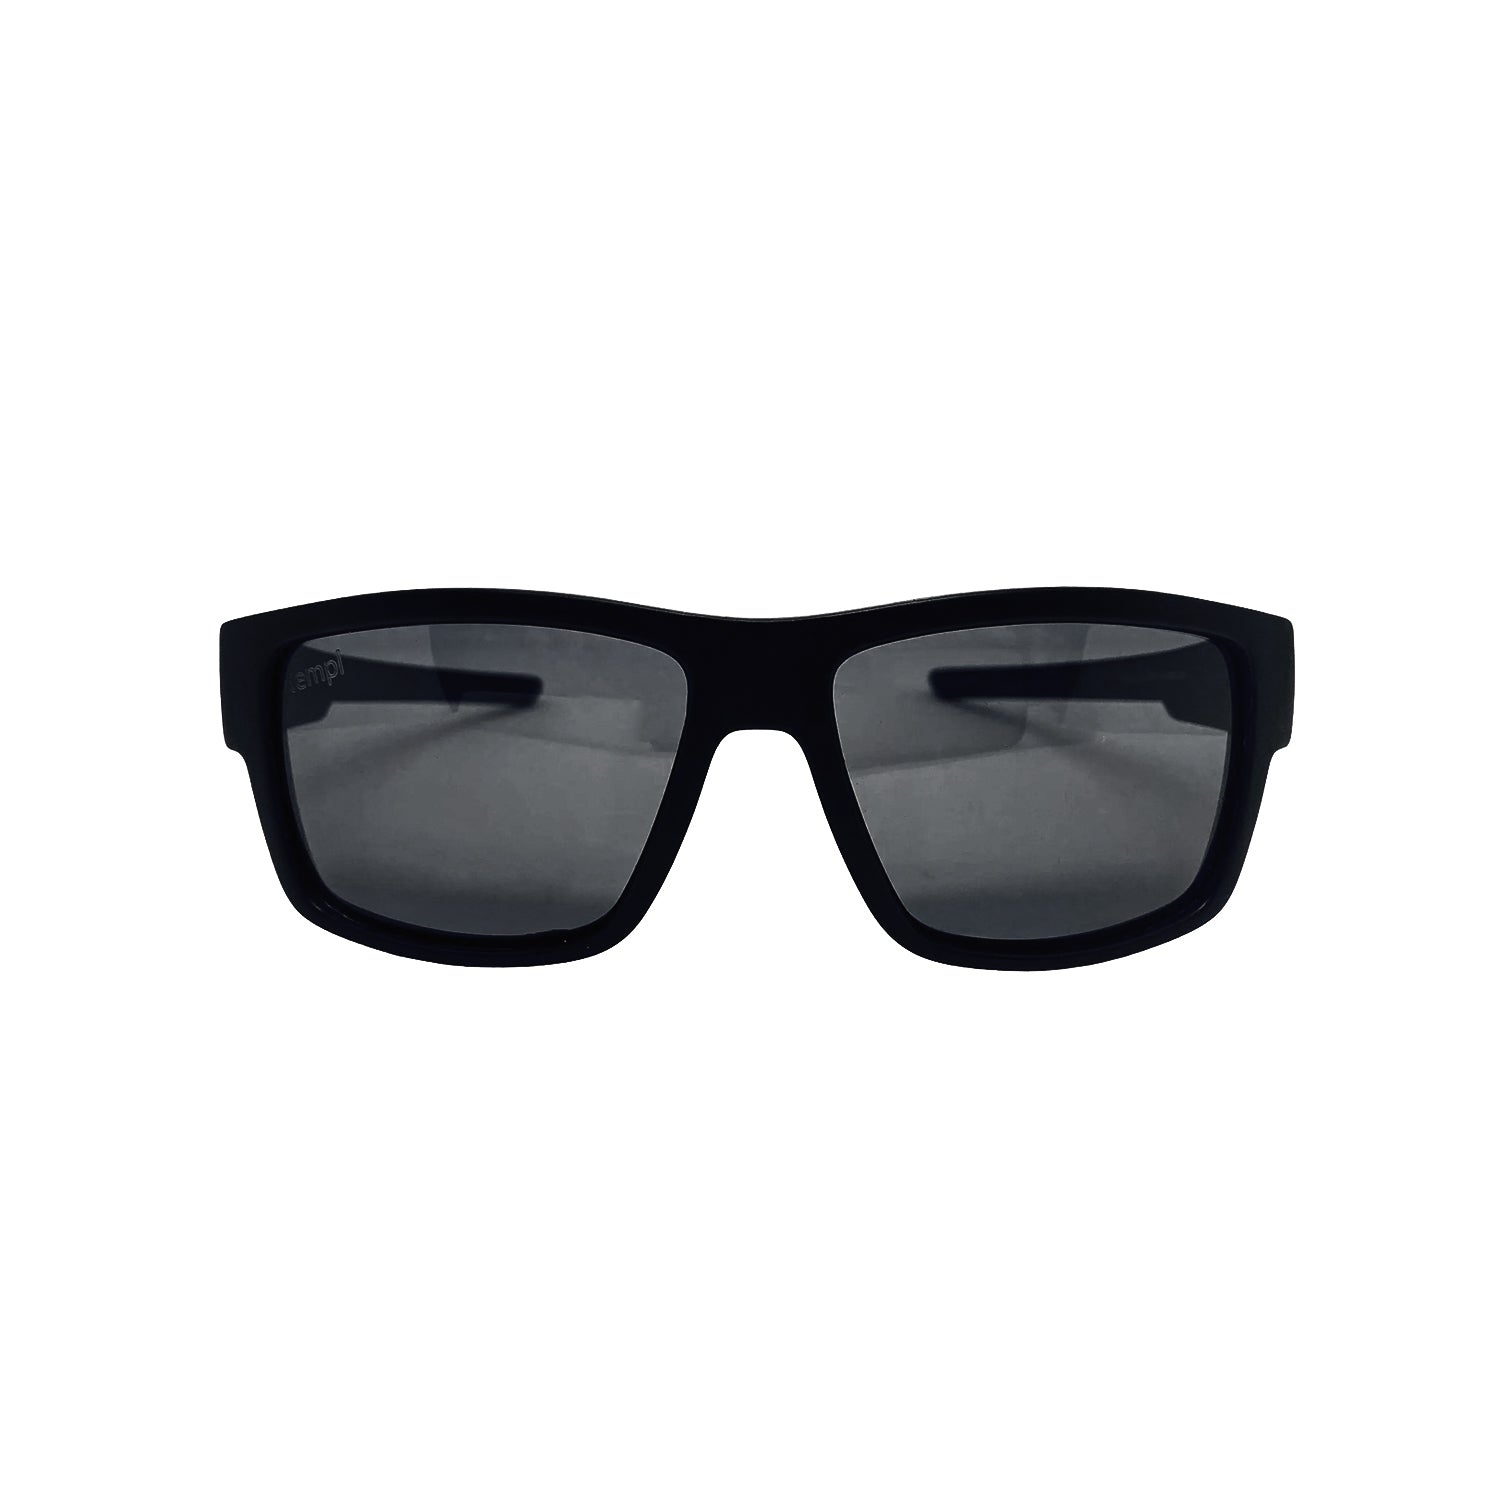 The Kai - Polarized Floating Sunglasses - Matte Black